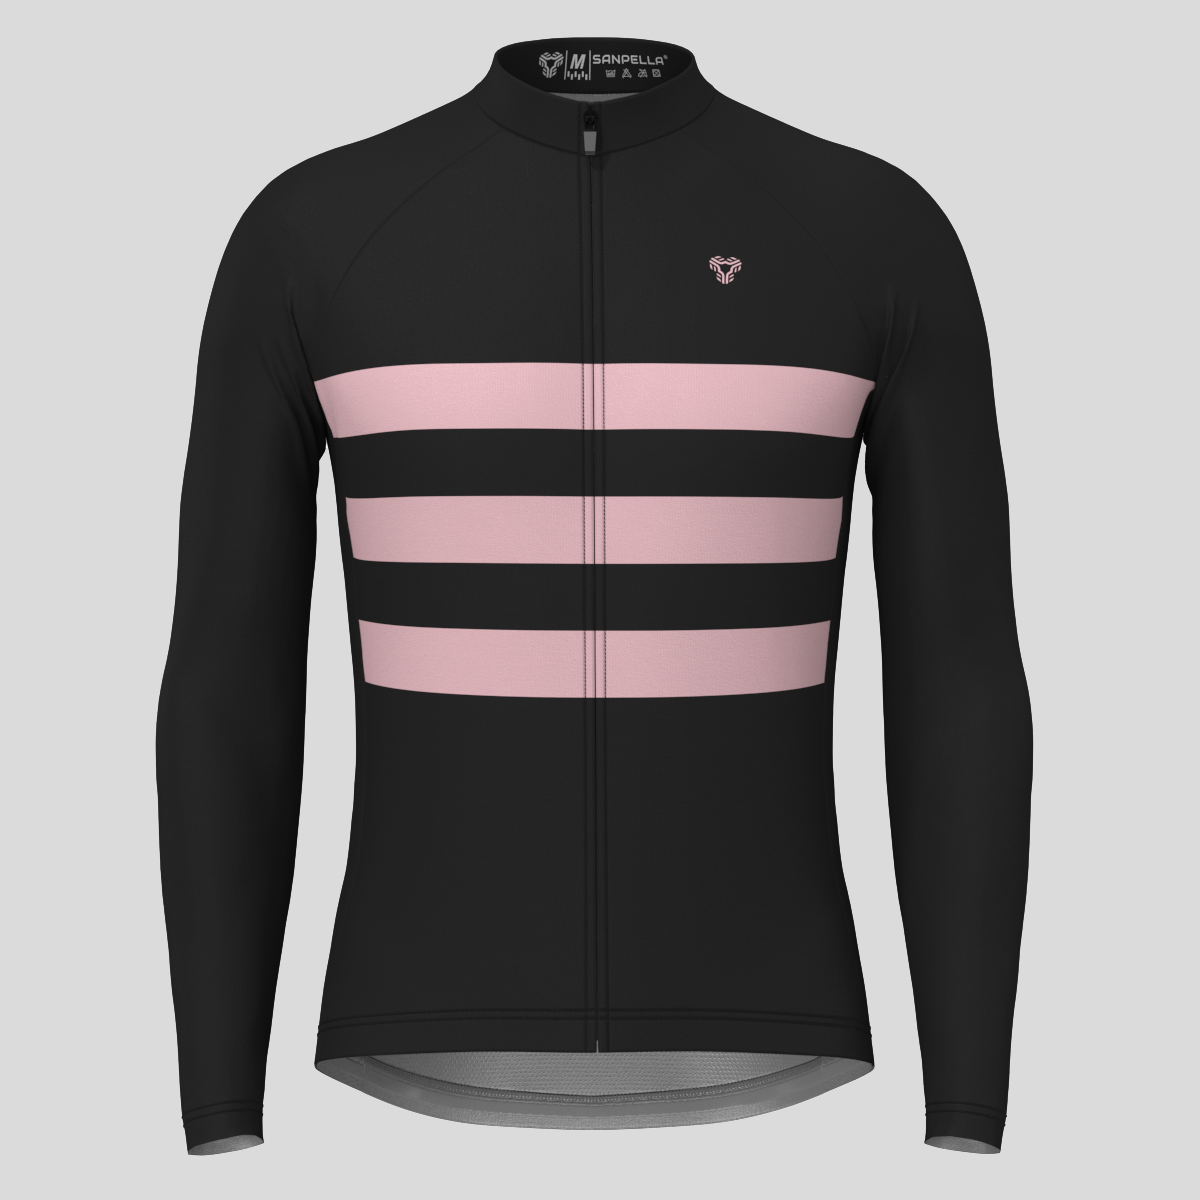 Men's Classic Stripes LS Cycling Jersey - Black/Pink